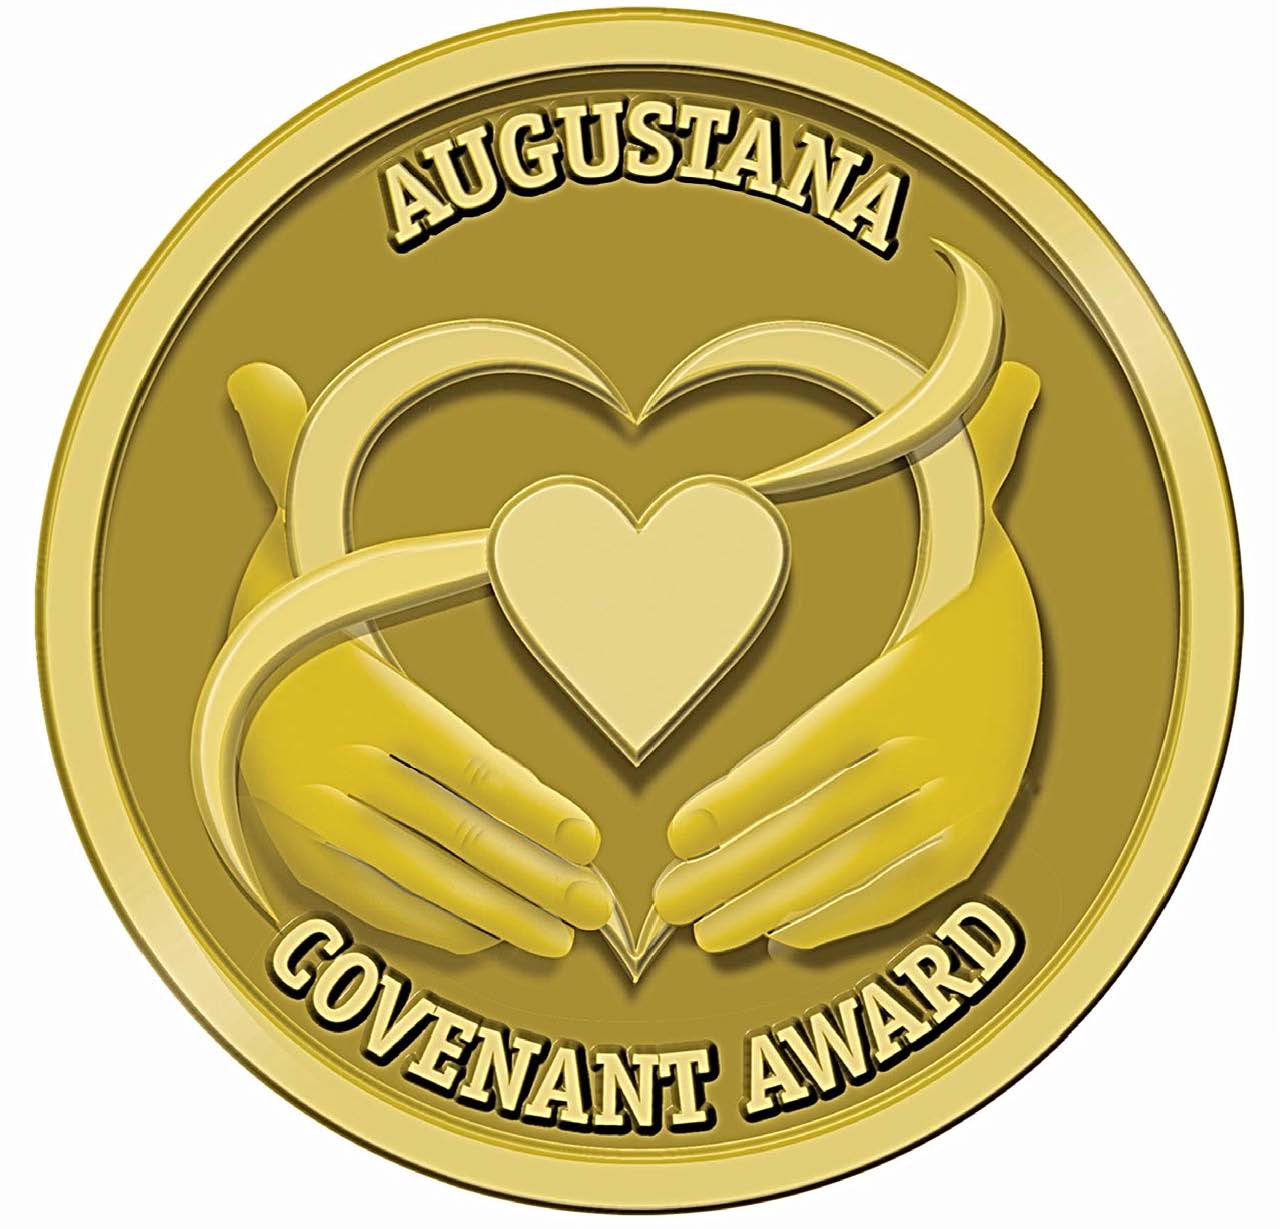 Covenant Award Information